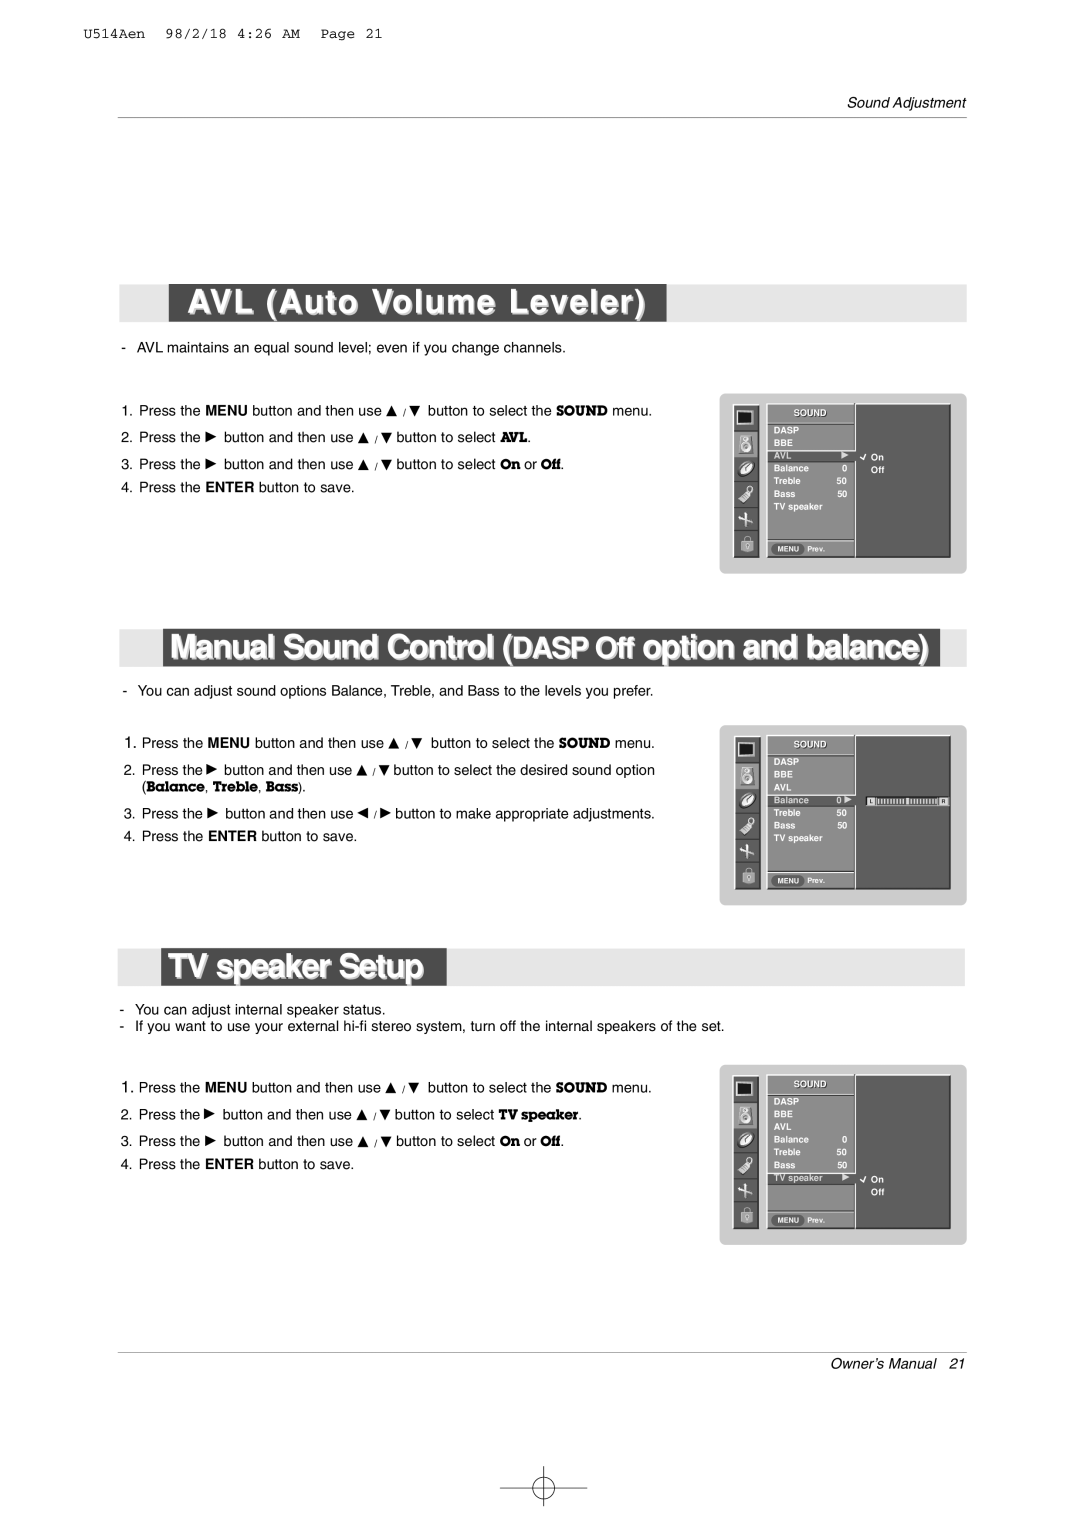 LG Electronics 42PM1M AVL Auto Volume Leveler, Manual Sound Control DASP Off option and balance, TV speaker Setup, Avlg 